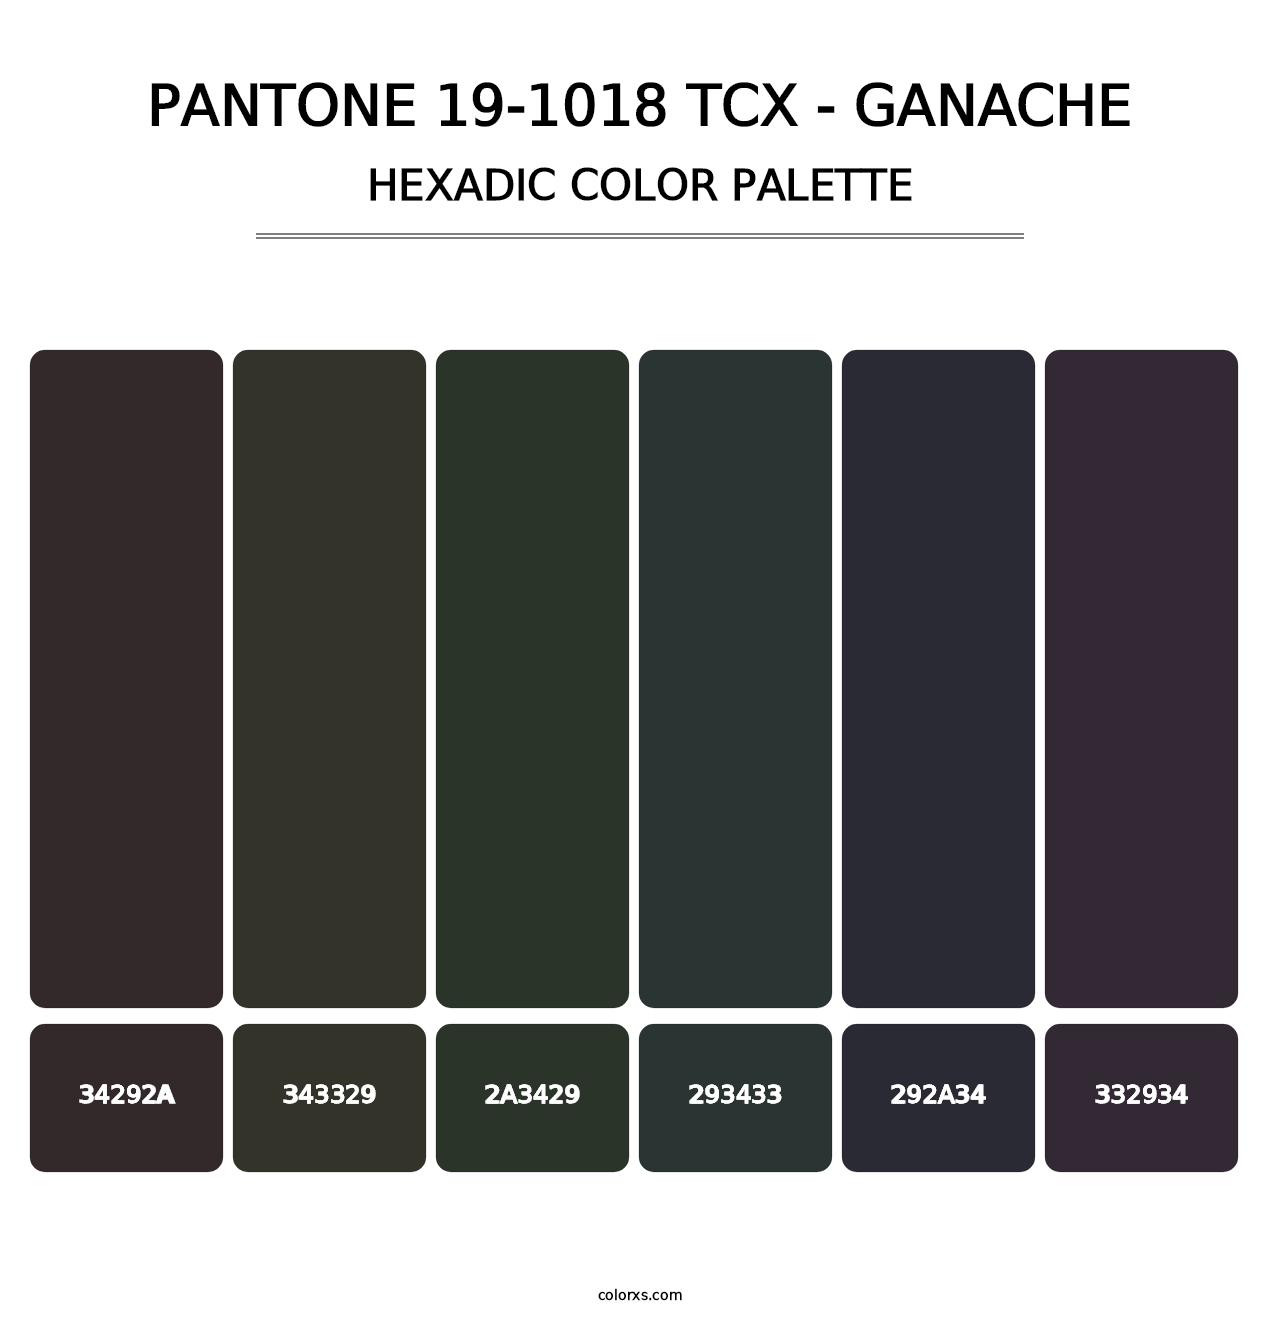 PANTONE 19-1018 TCX - Ganache - Hexadic Color Palette